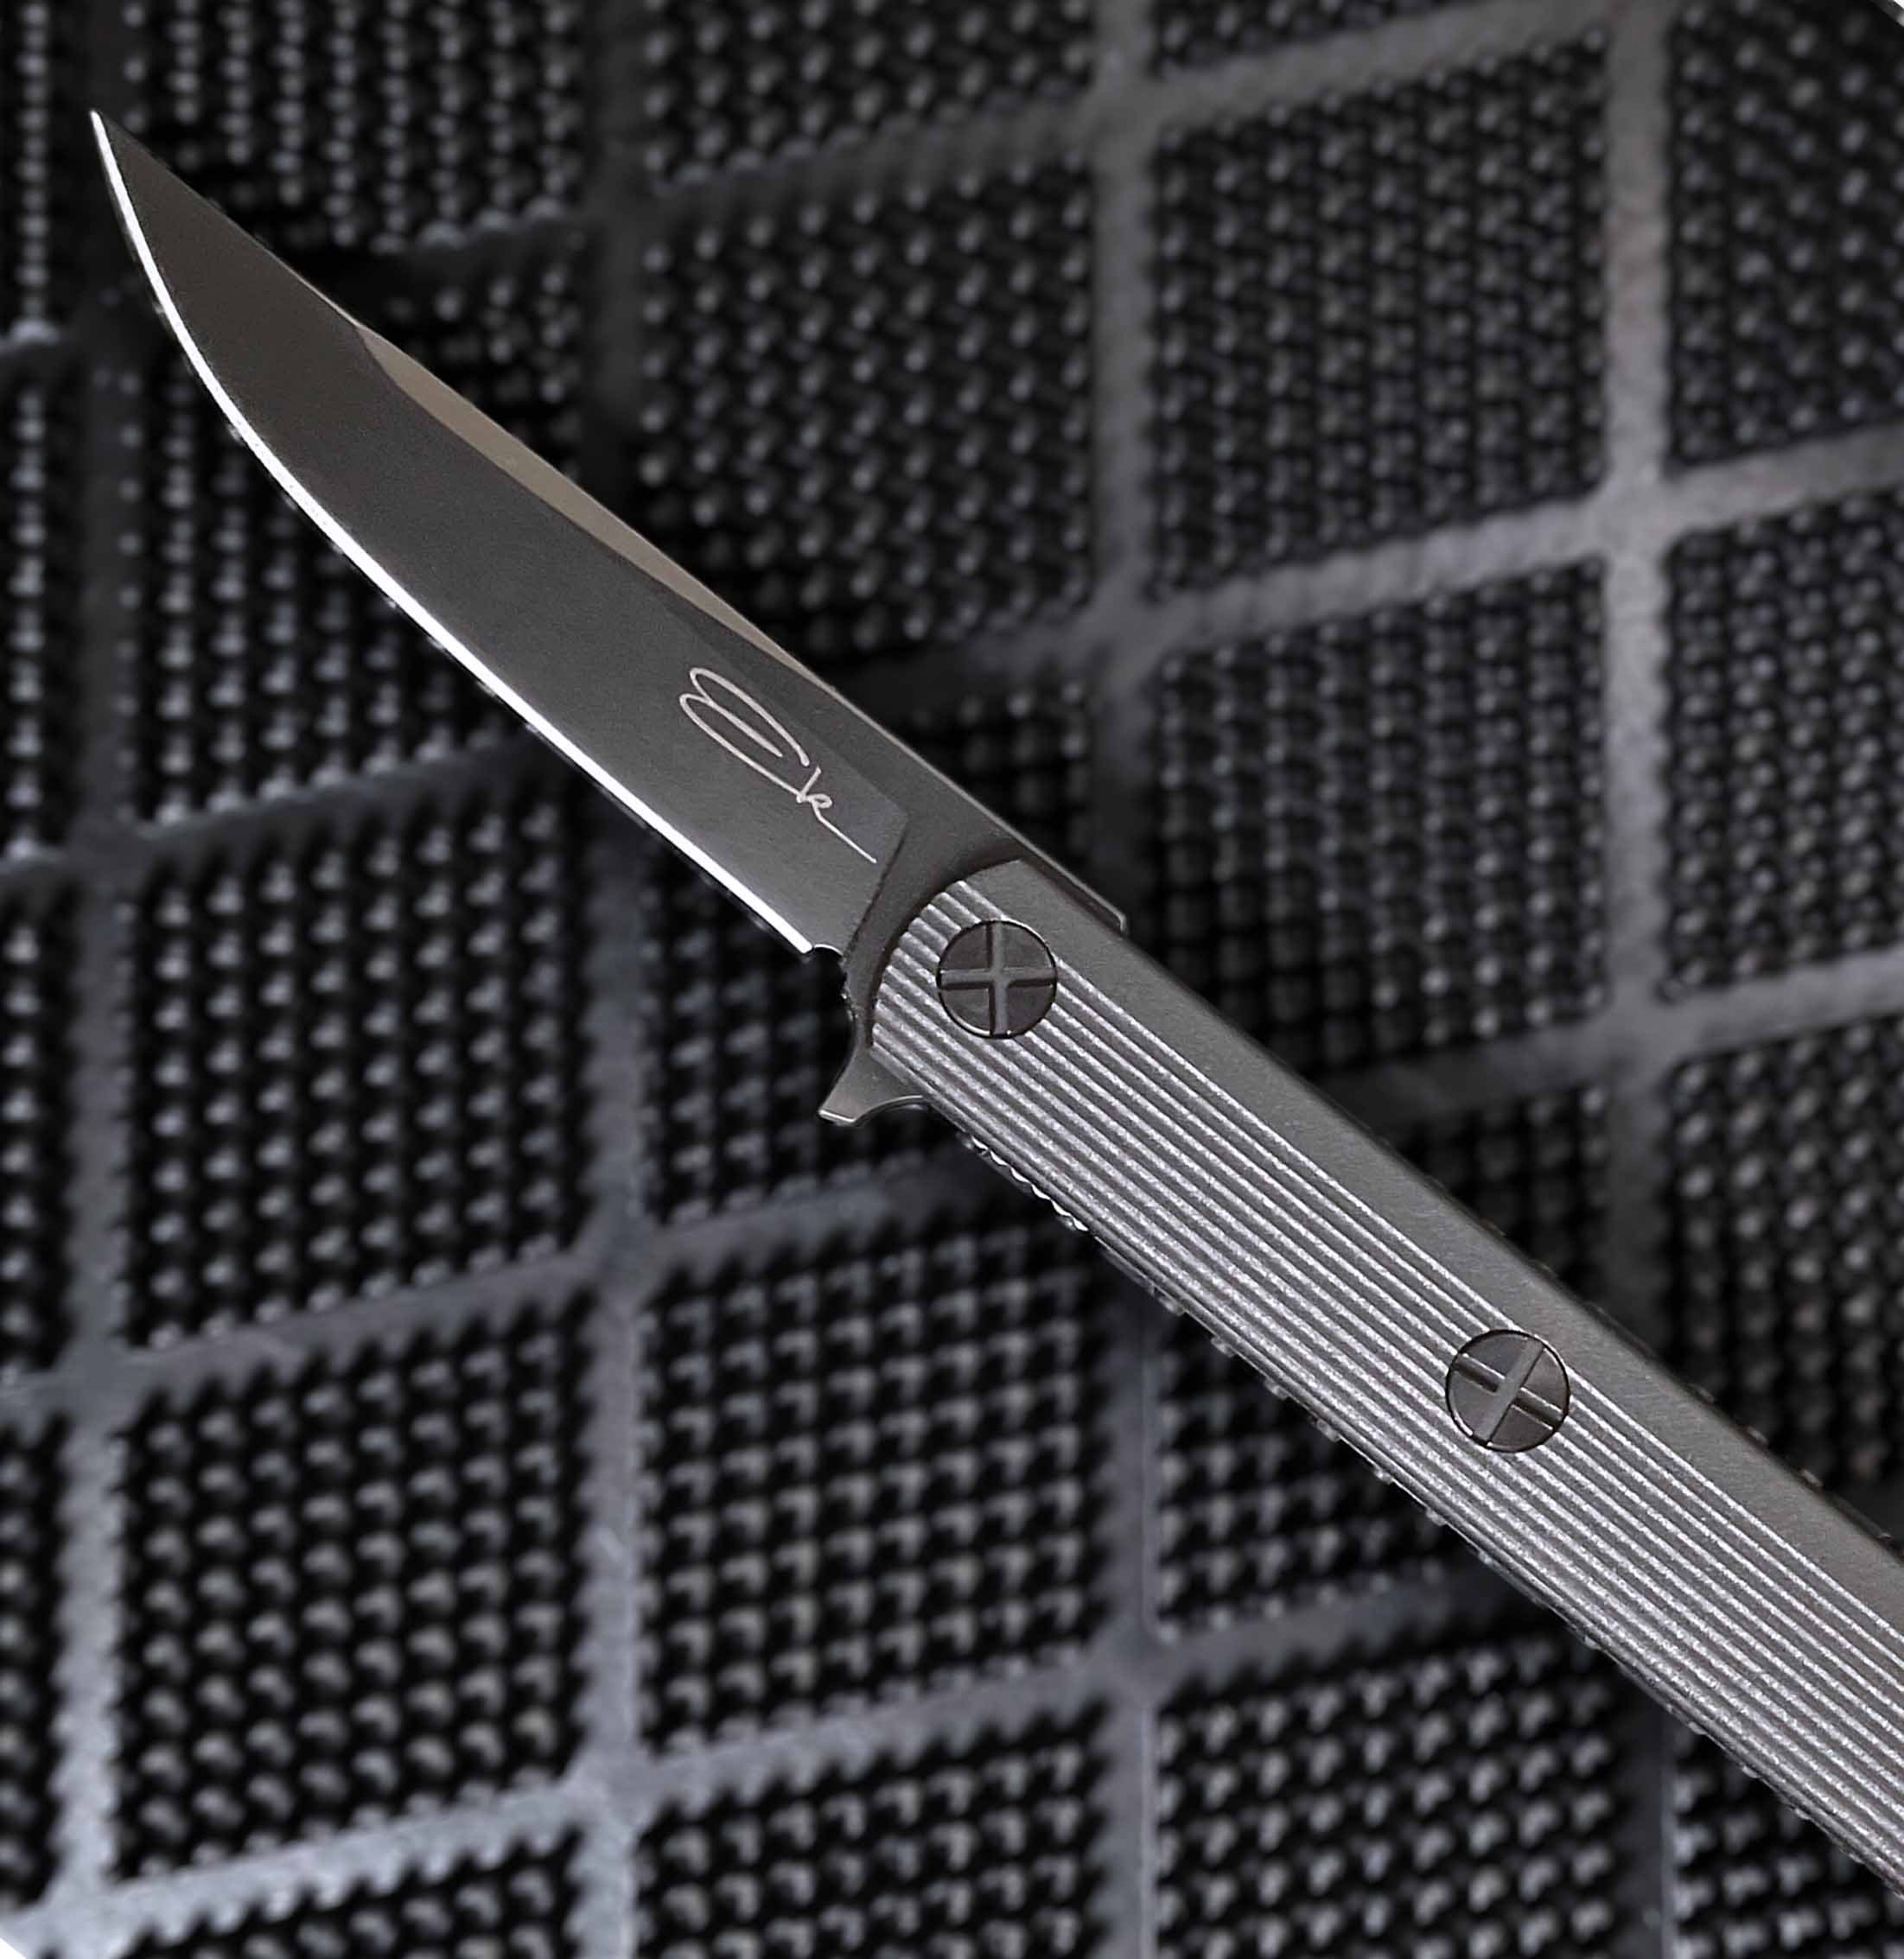 KA-BAR Knives, Inc